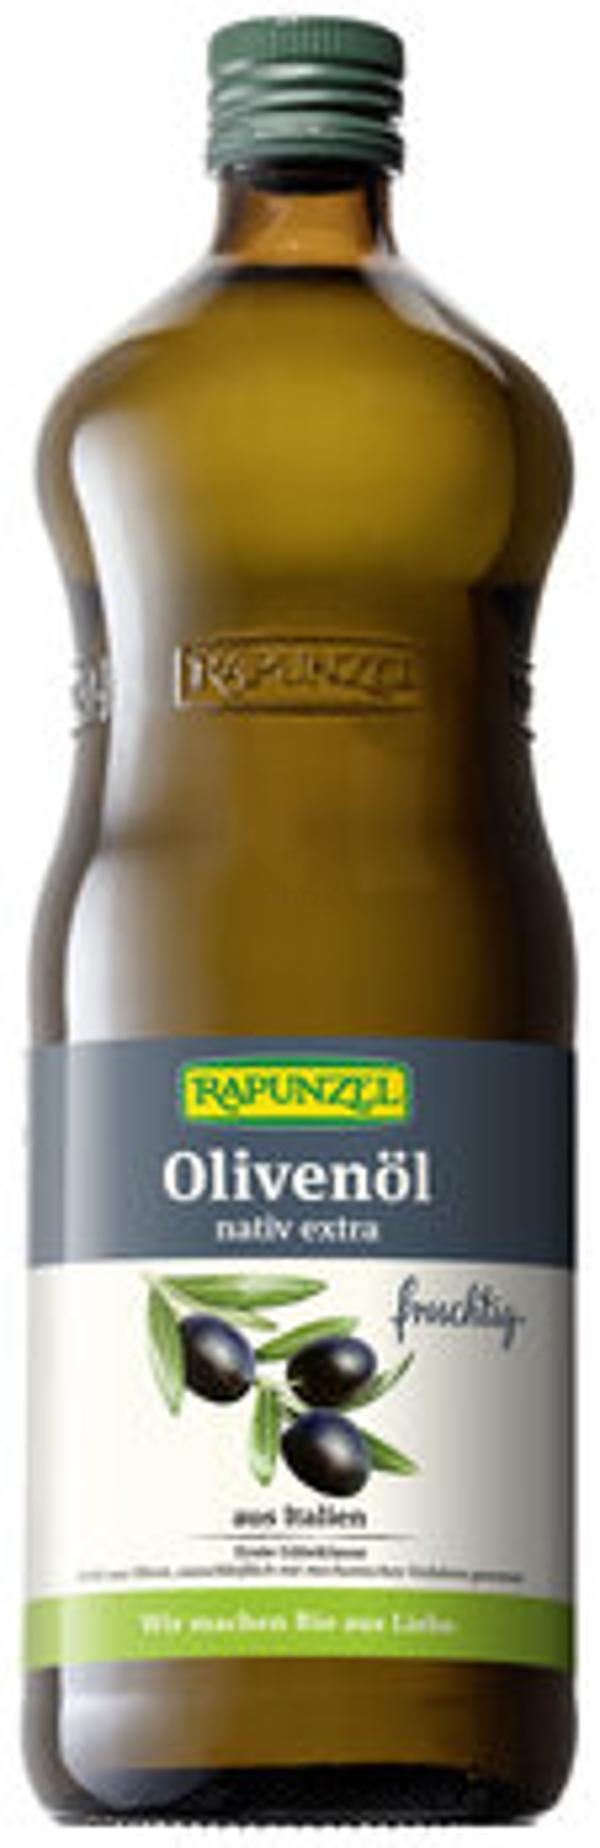 Produktfoto zu Olivenöl nativ extra, 1 l